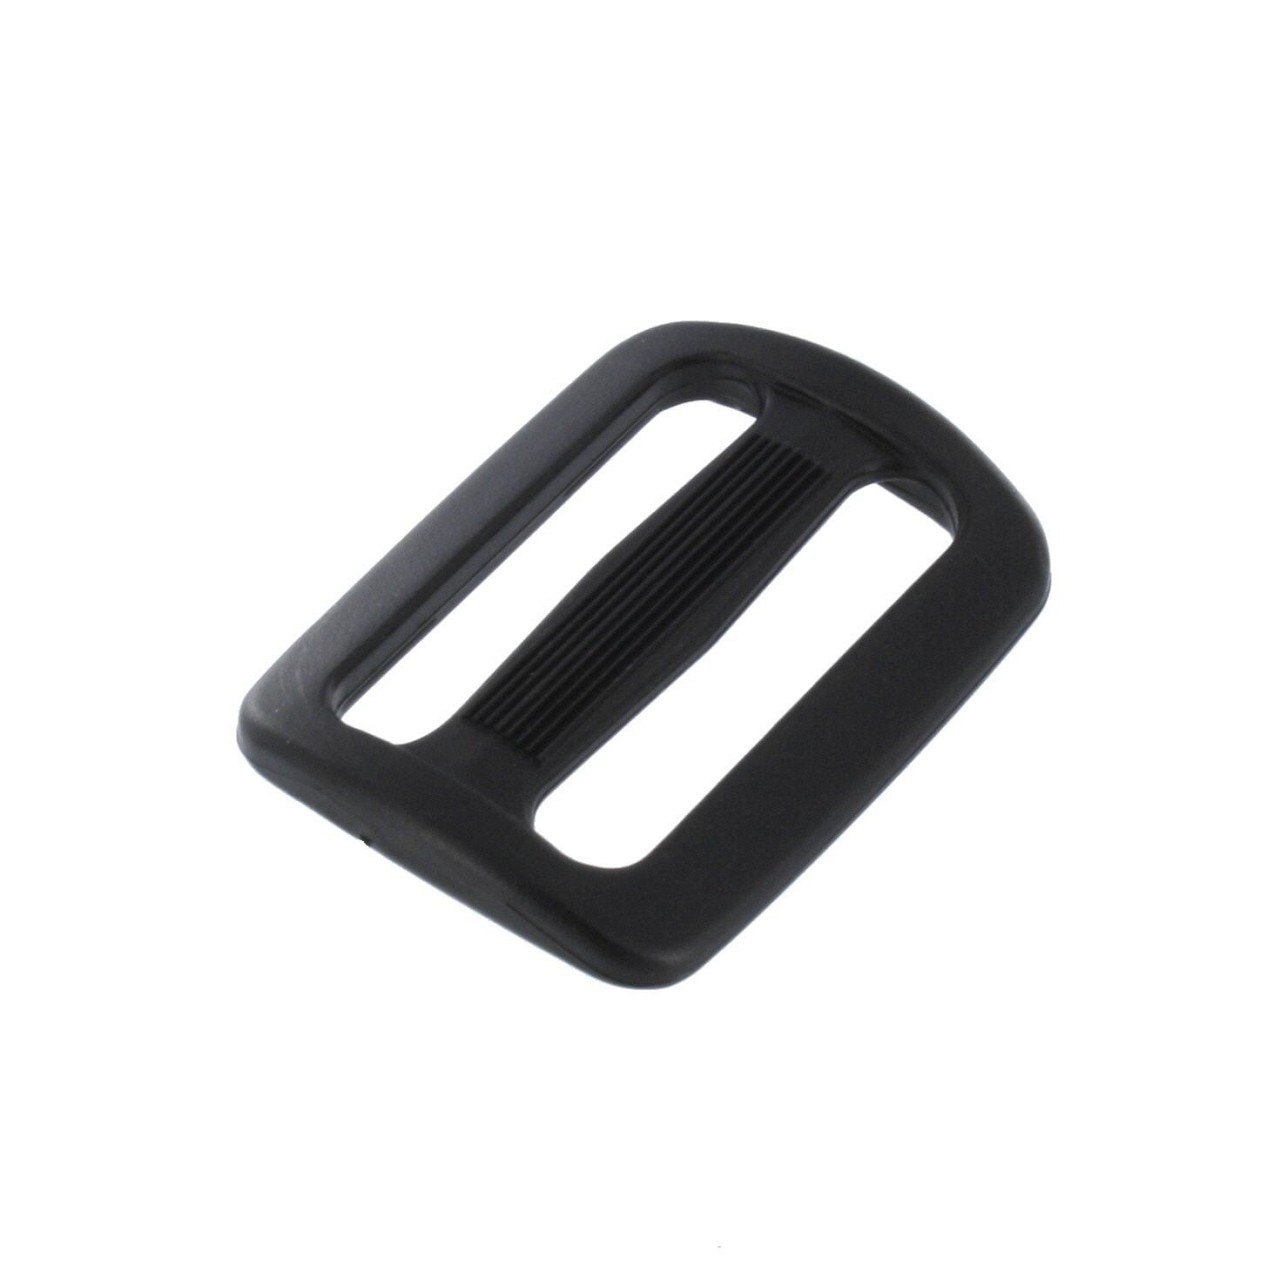 60 pieces BLACK plastic bra strap adjuster Tri Glide slider o ring rings  3/8